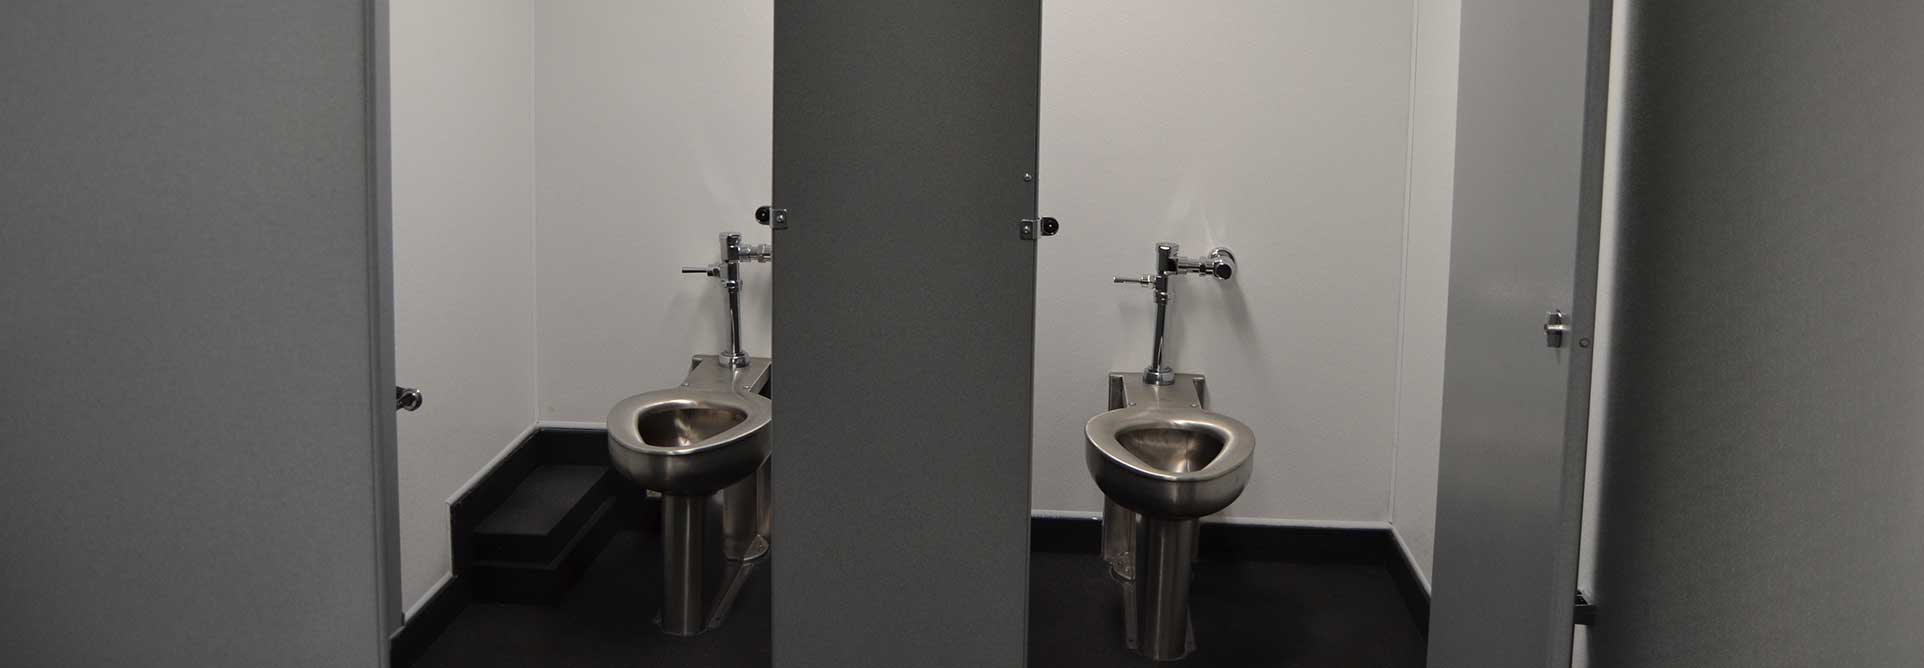 restroom-case-study-toilets